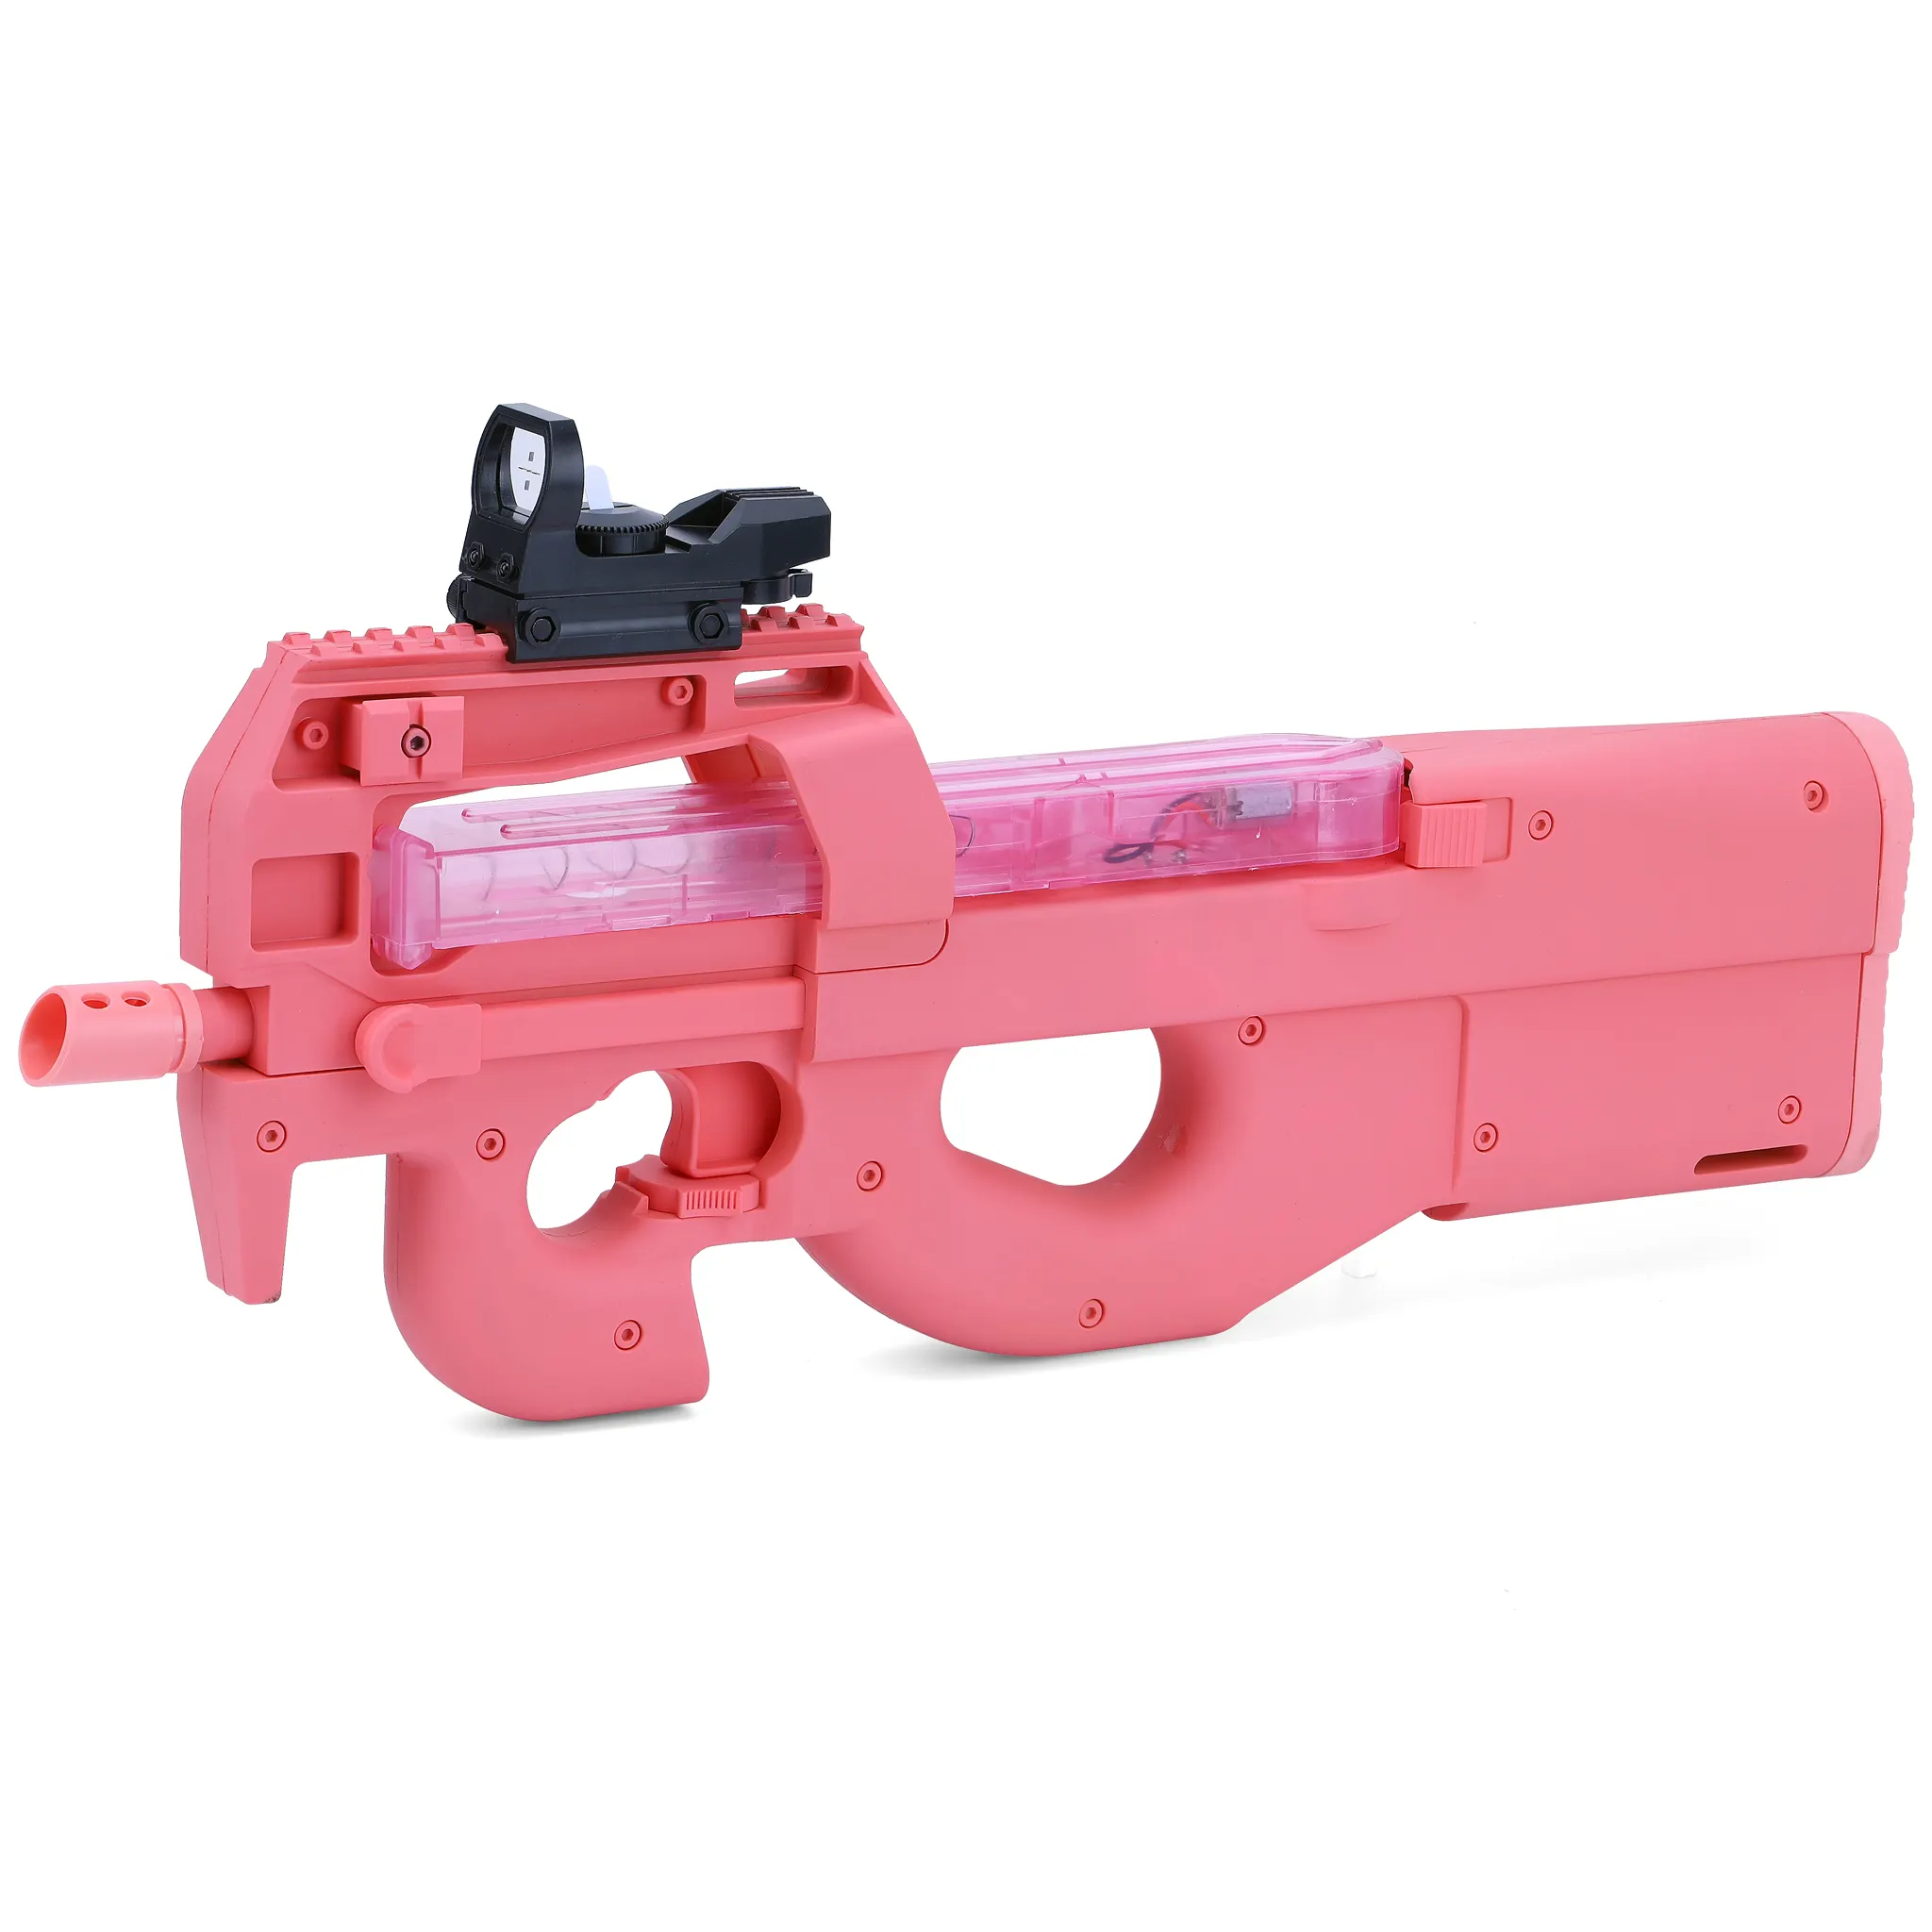 Zhorya Australia Seperti Remaja Daya Gel Blaster Ledakan Mainan P90 V3 Pink Pistolas De Nylon Gel Splat Bola Blaster Pistol Mainan